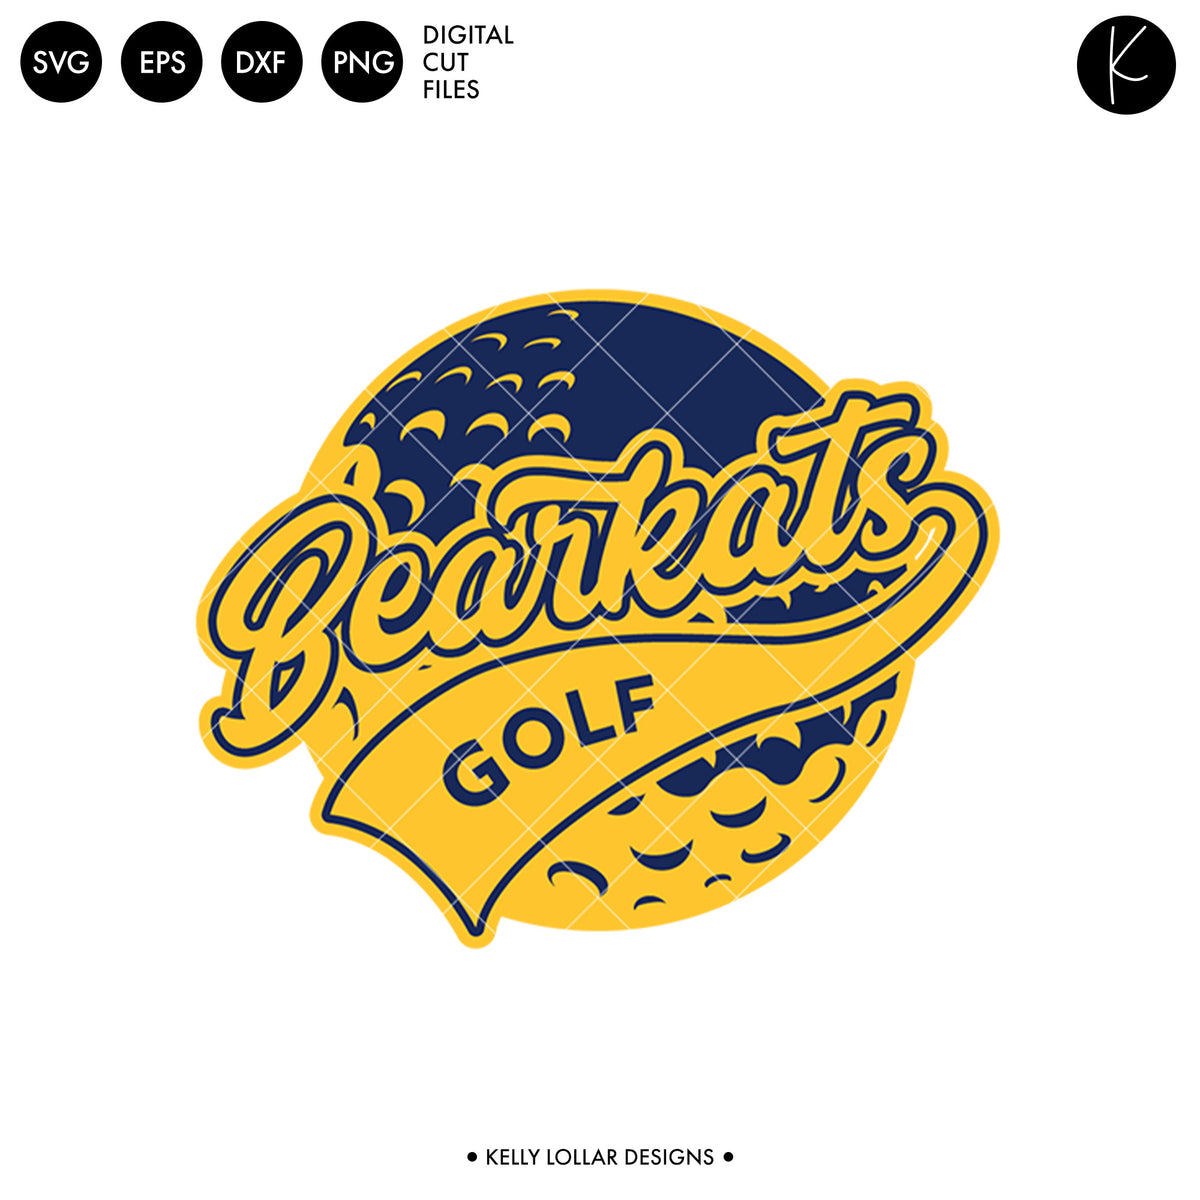 Bearkats Golf Bundle | SVG DXF EPS PNG Cut Files